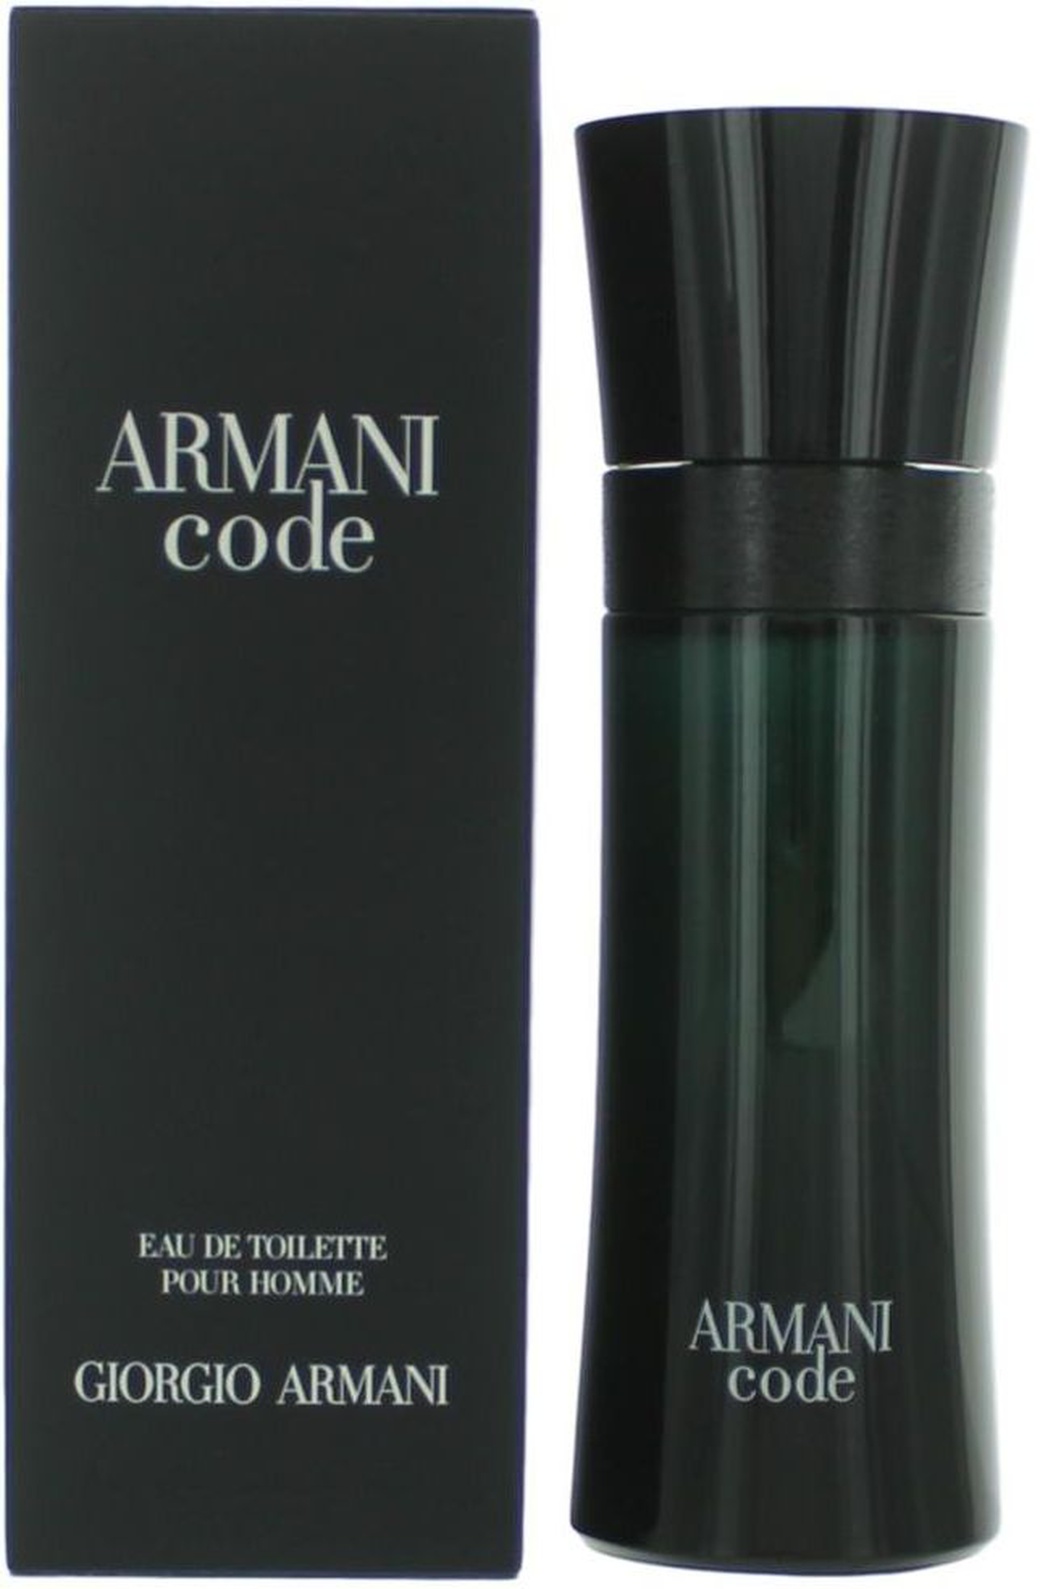 Armani code homme. Giorgio Armani "Armani code Parfum" 125 ml. Giorgio Armani code 75мл. Armani code Parfum мужской. Armani code Parfum 75 ml.